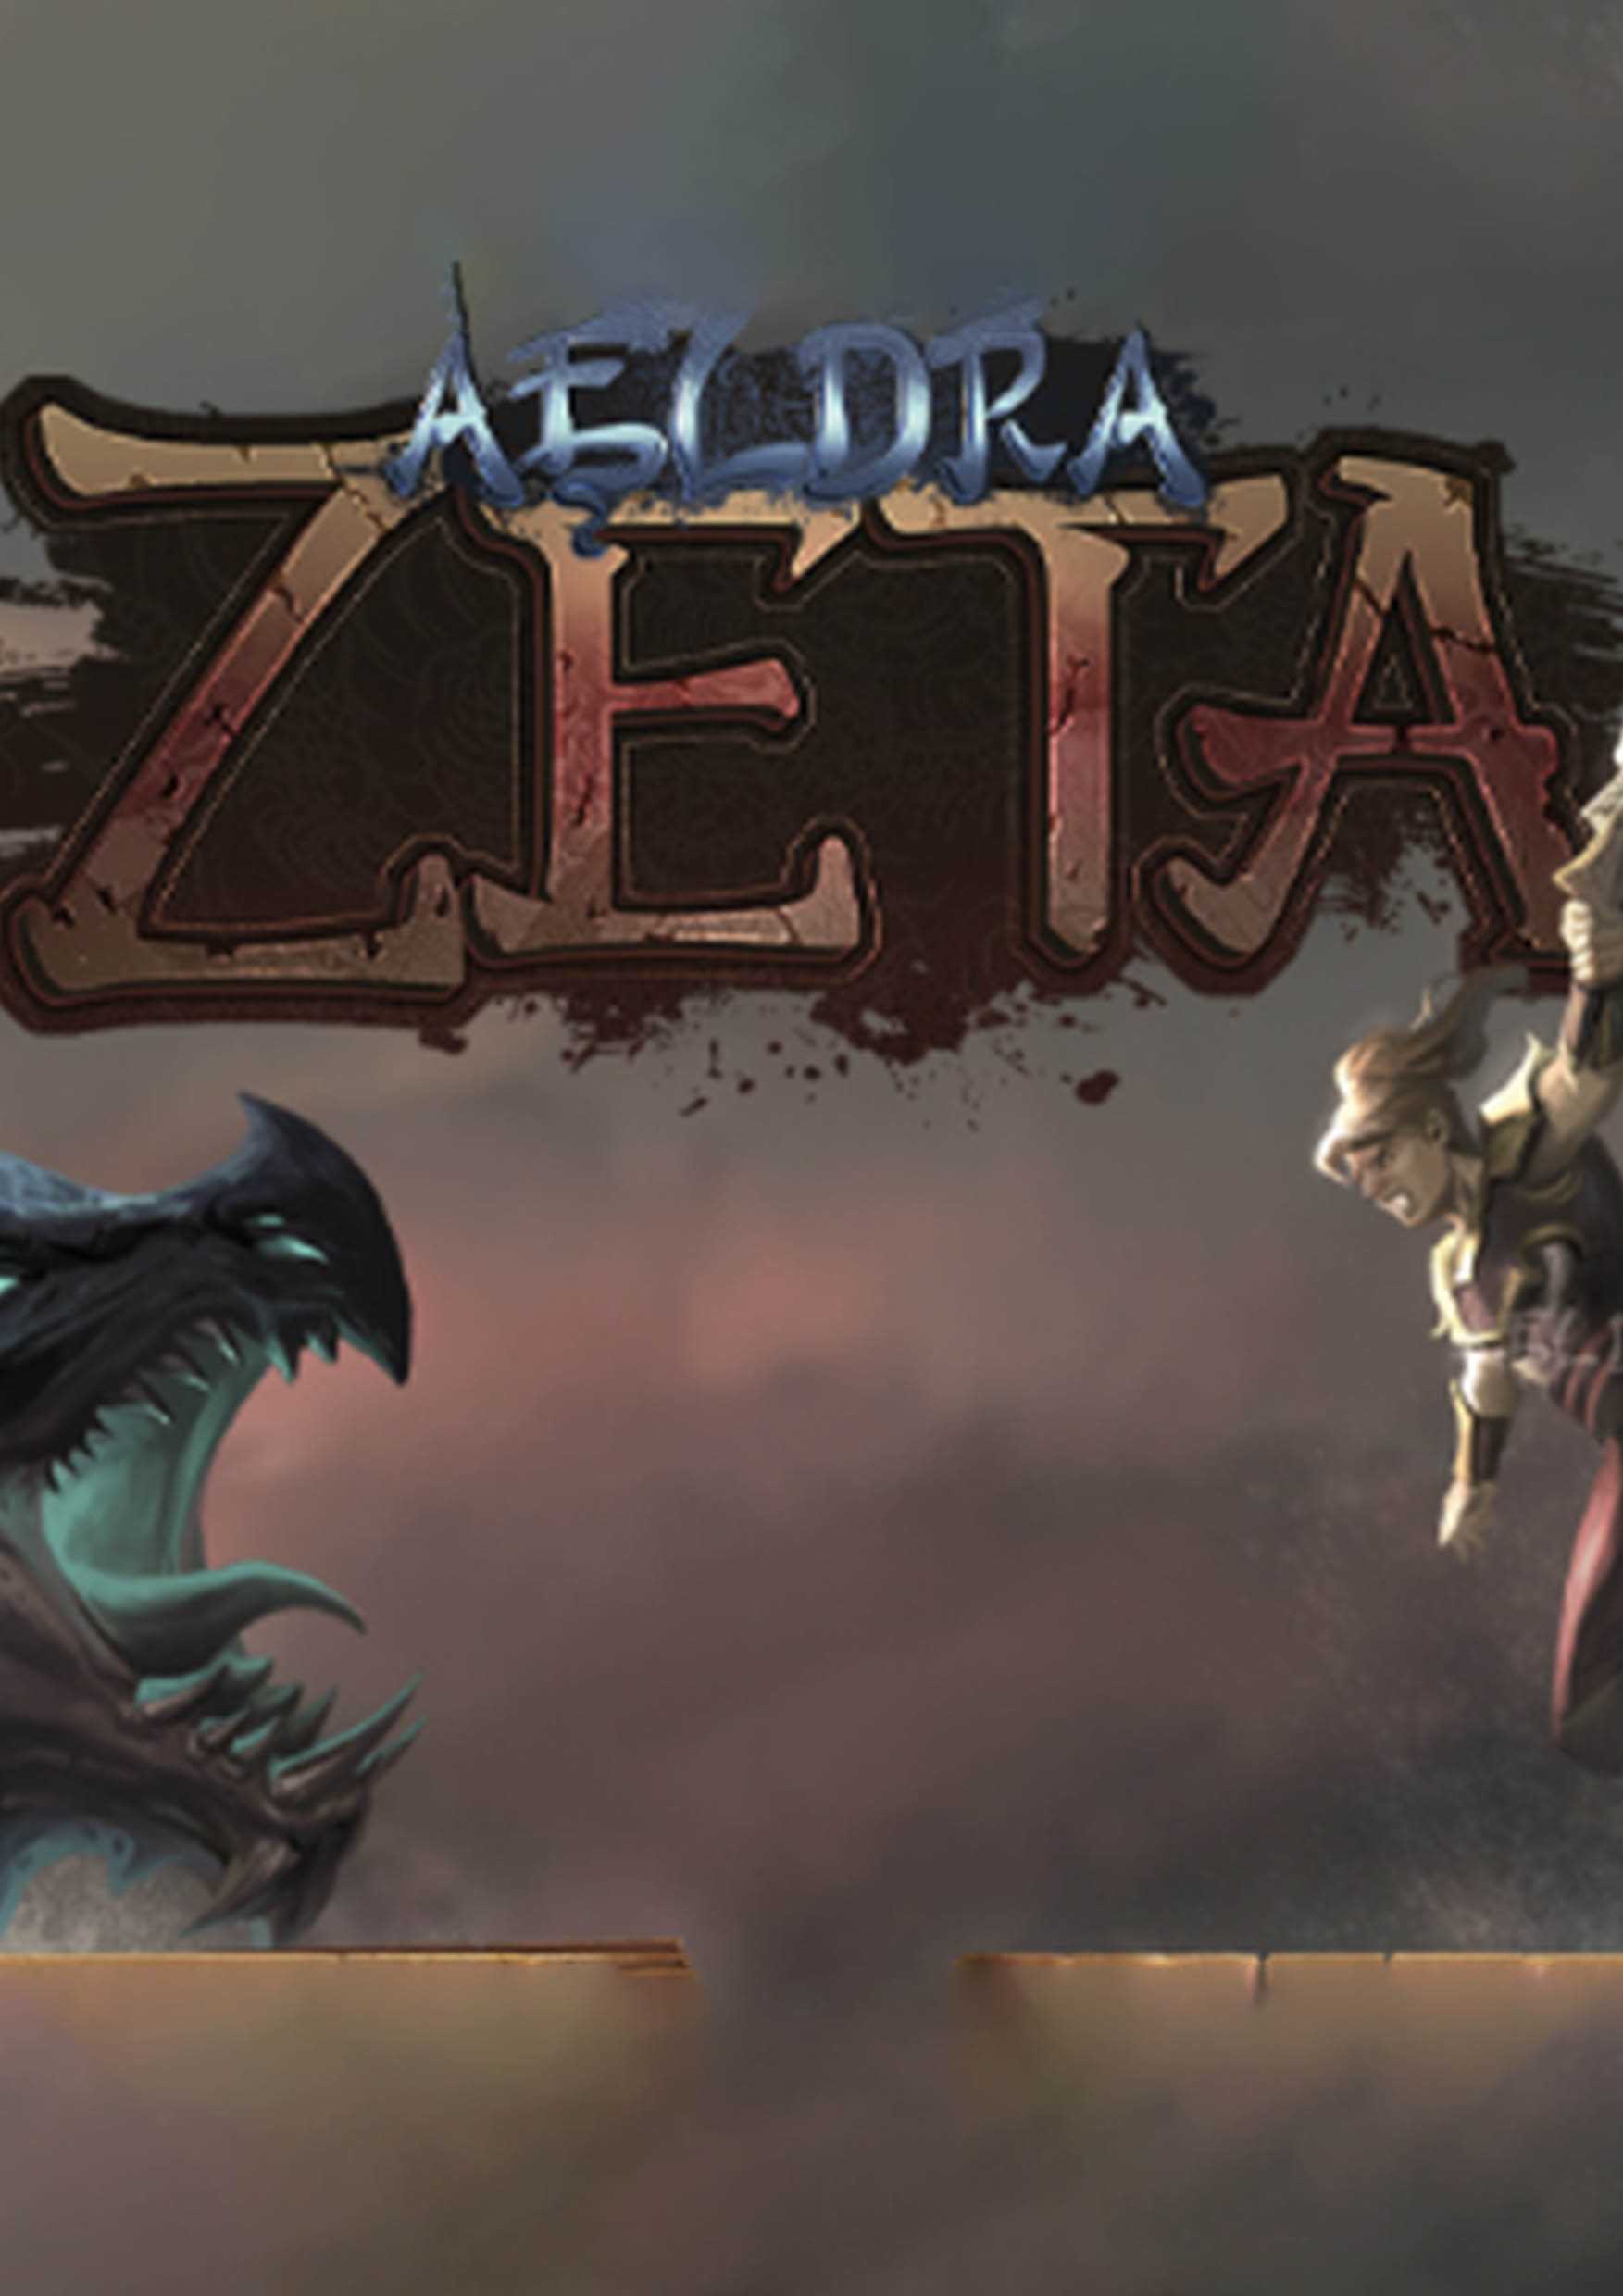 Aeldra Zeta